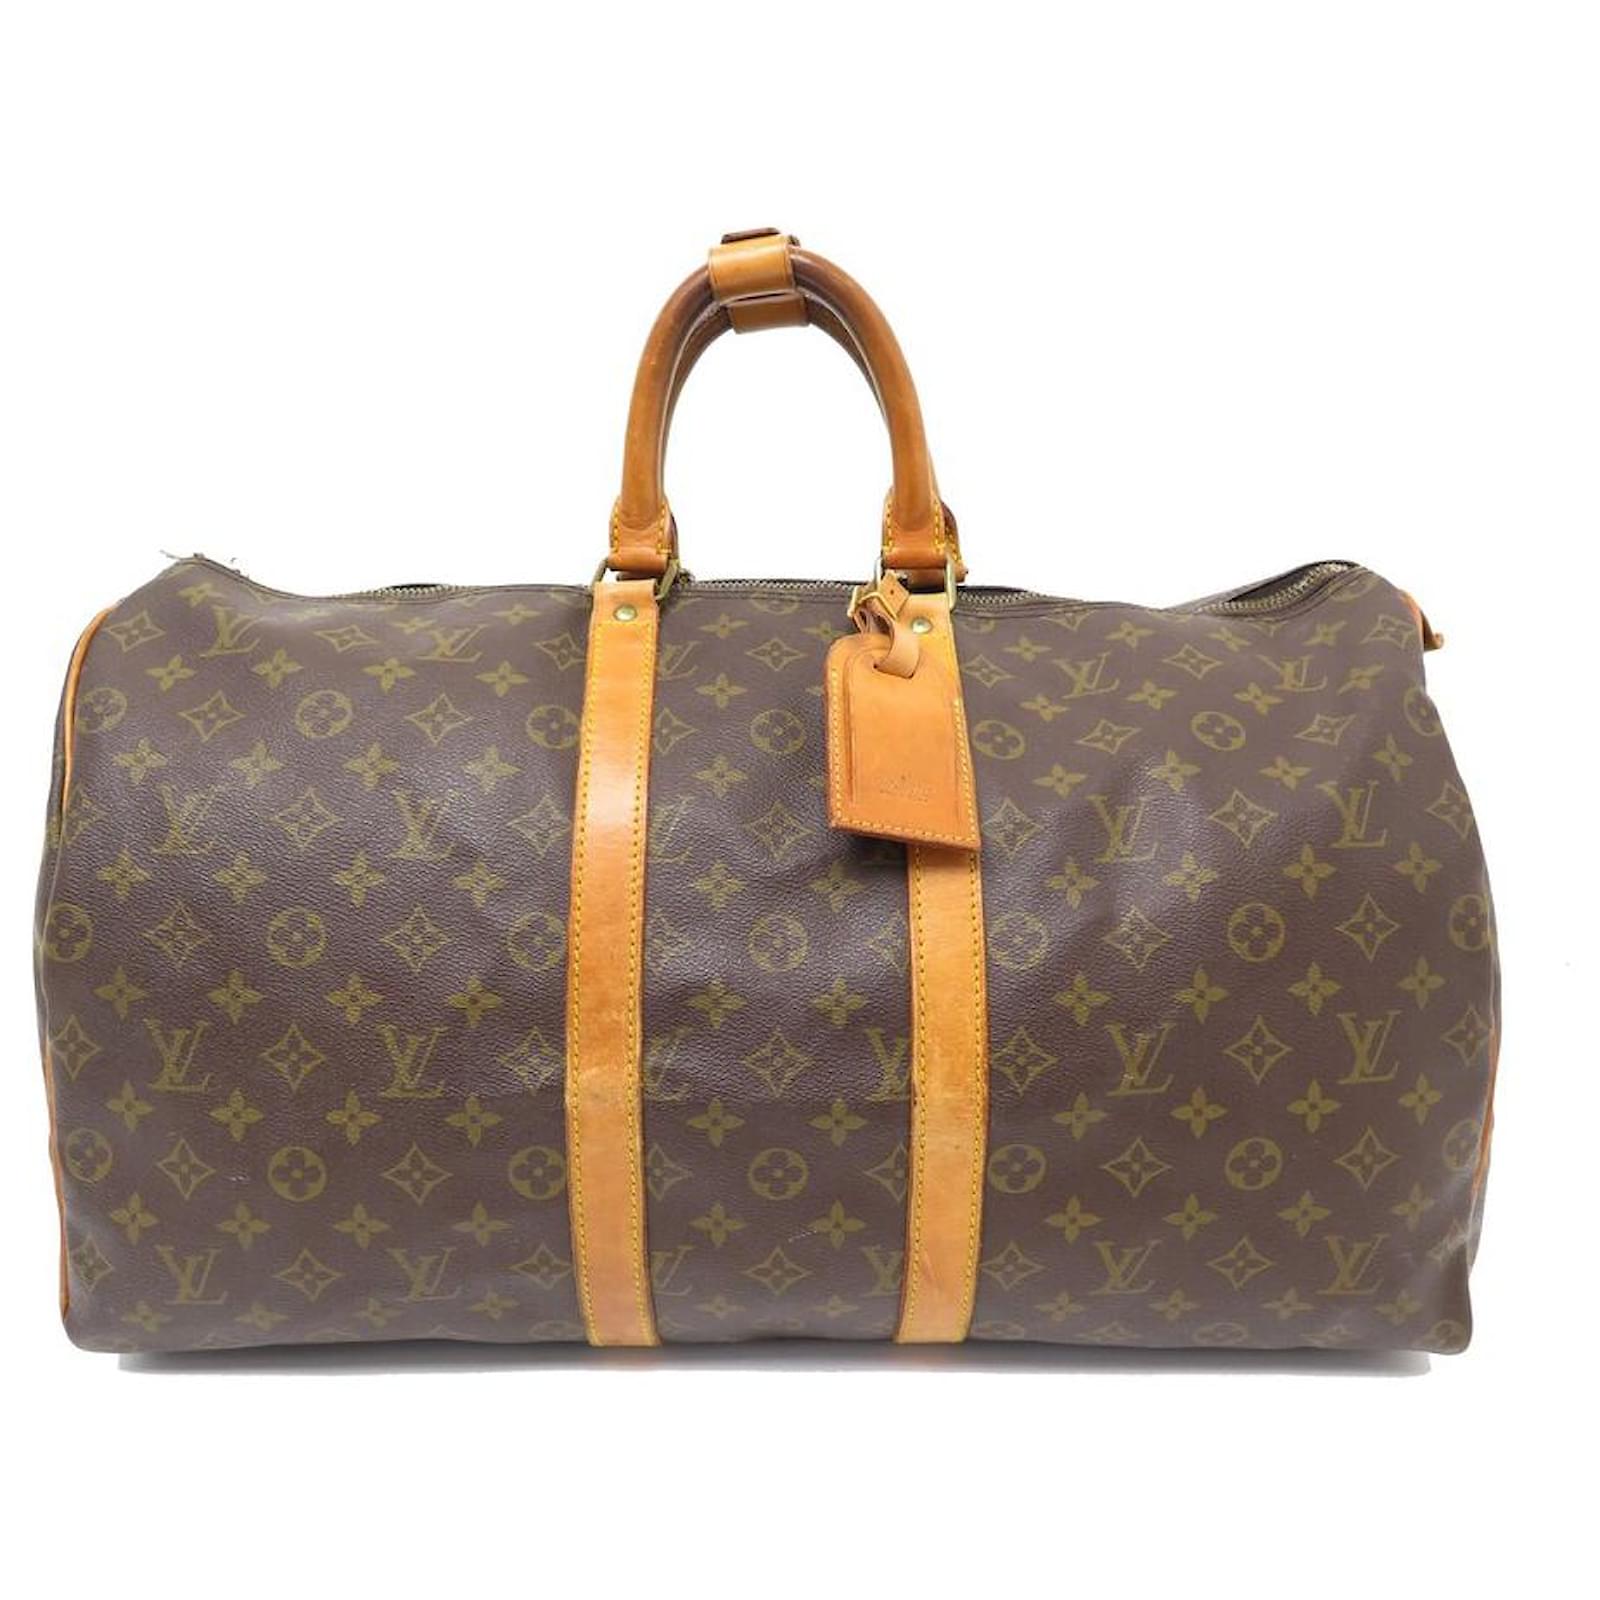 Vintage Louis Vuitton Travel Luggage Bag Suitcase 